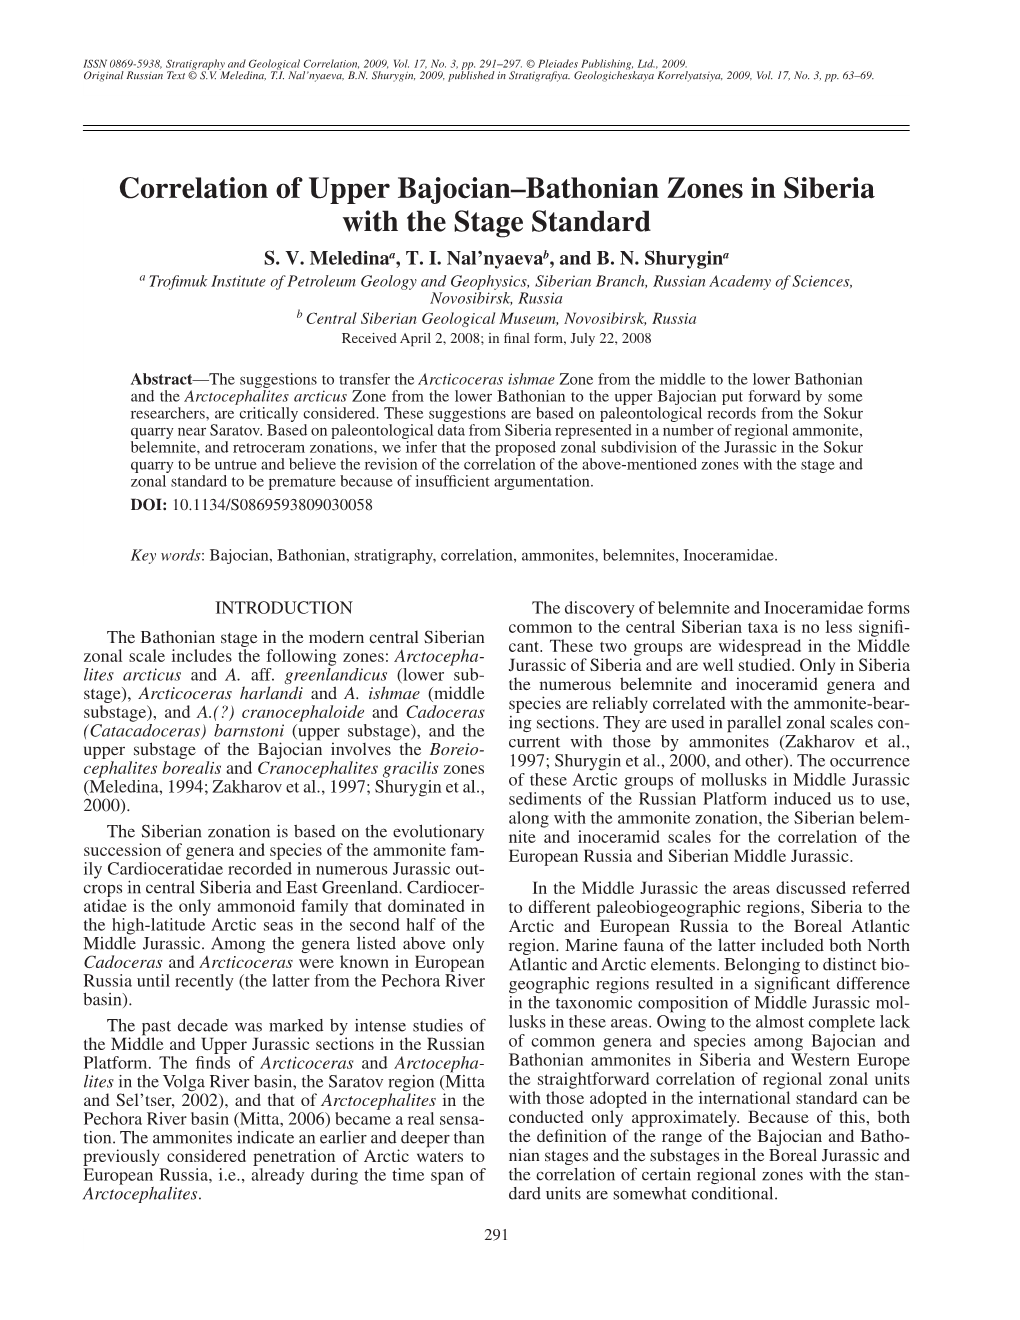 Correlation of Upper Bajocian–Bathonian Zones in Siberia With